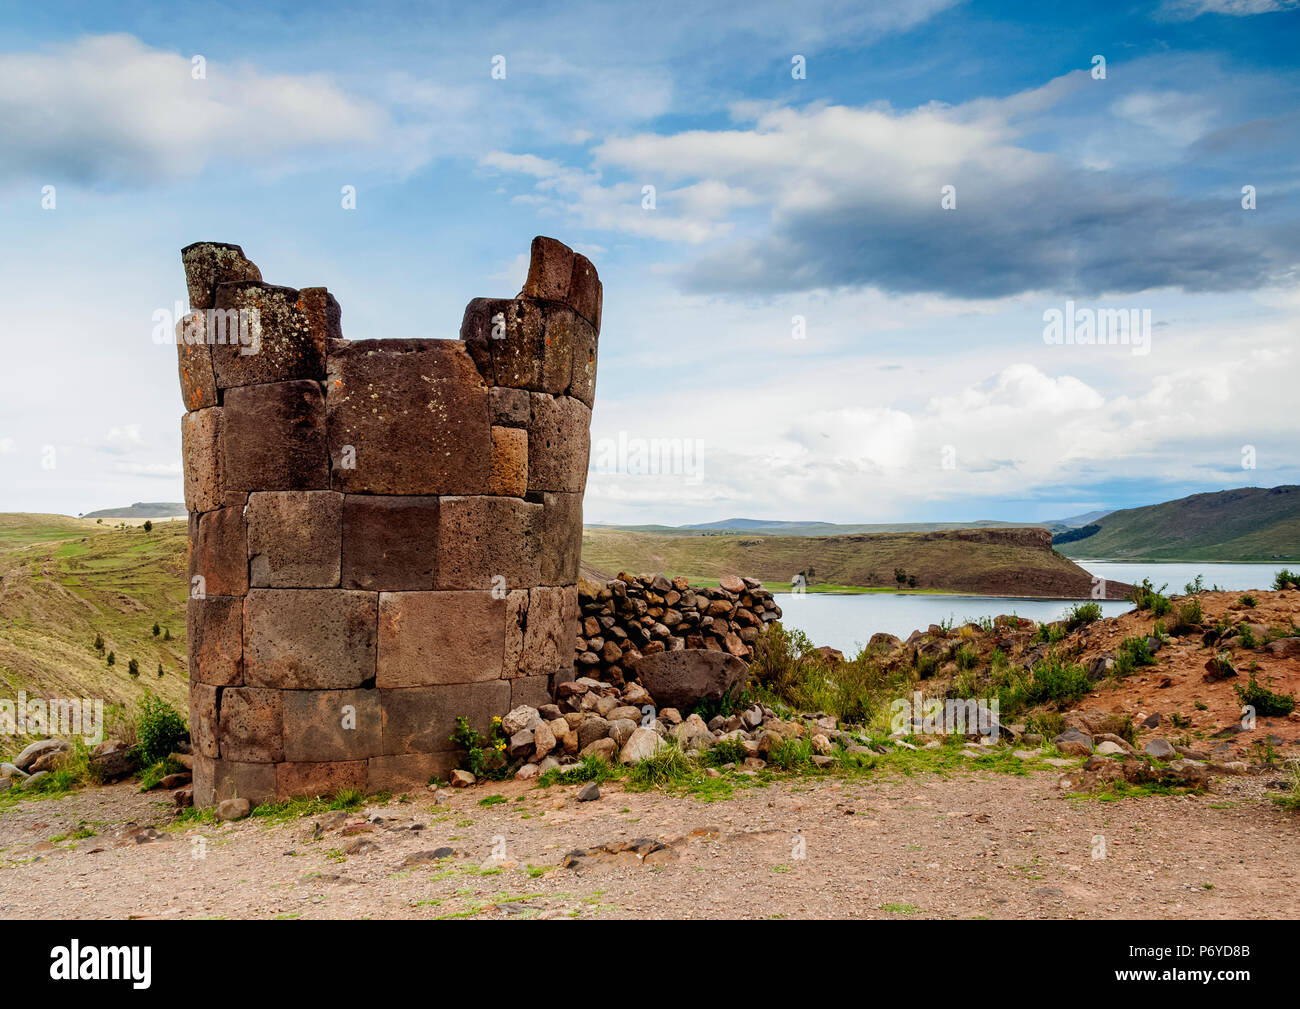 Chullpa by the Lake Umayo in Sillustani, Puno Region, Peru Stock Photo